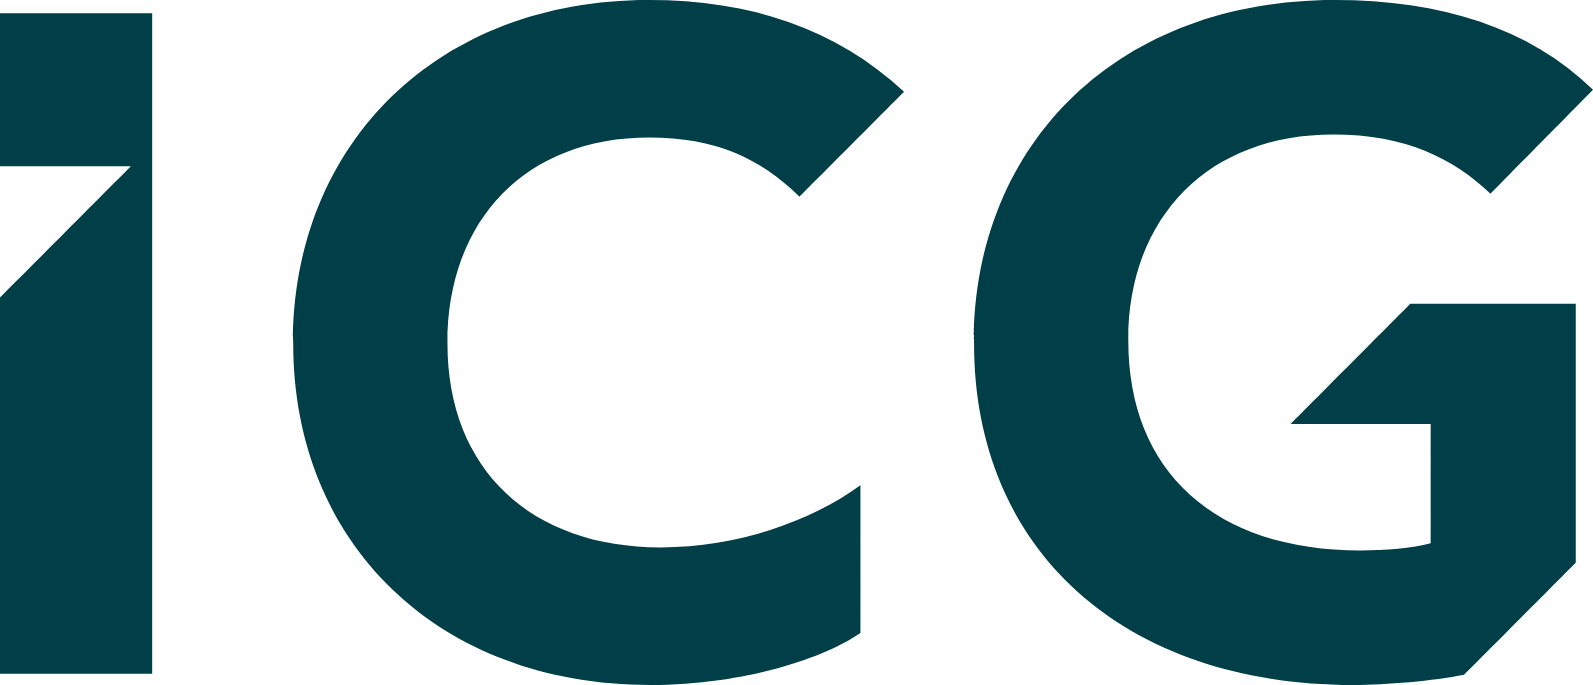 Intermediate Capital Group (ICG) Logo (transparentes PNG)